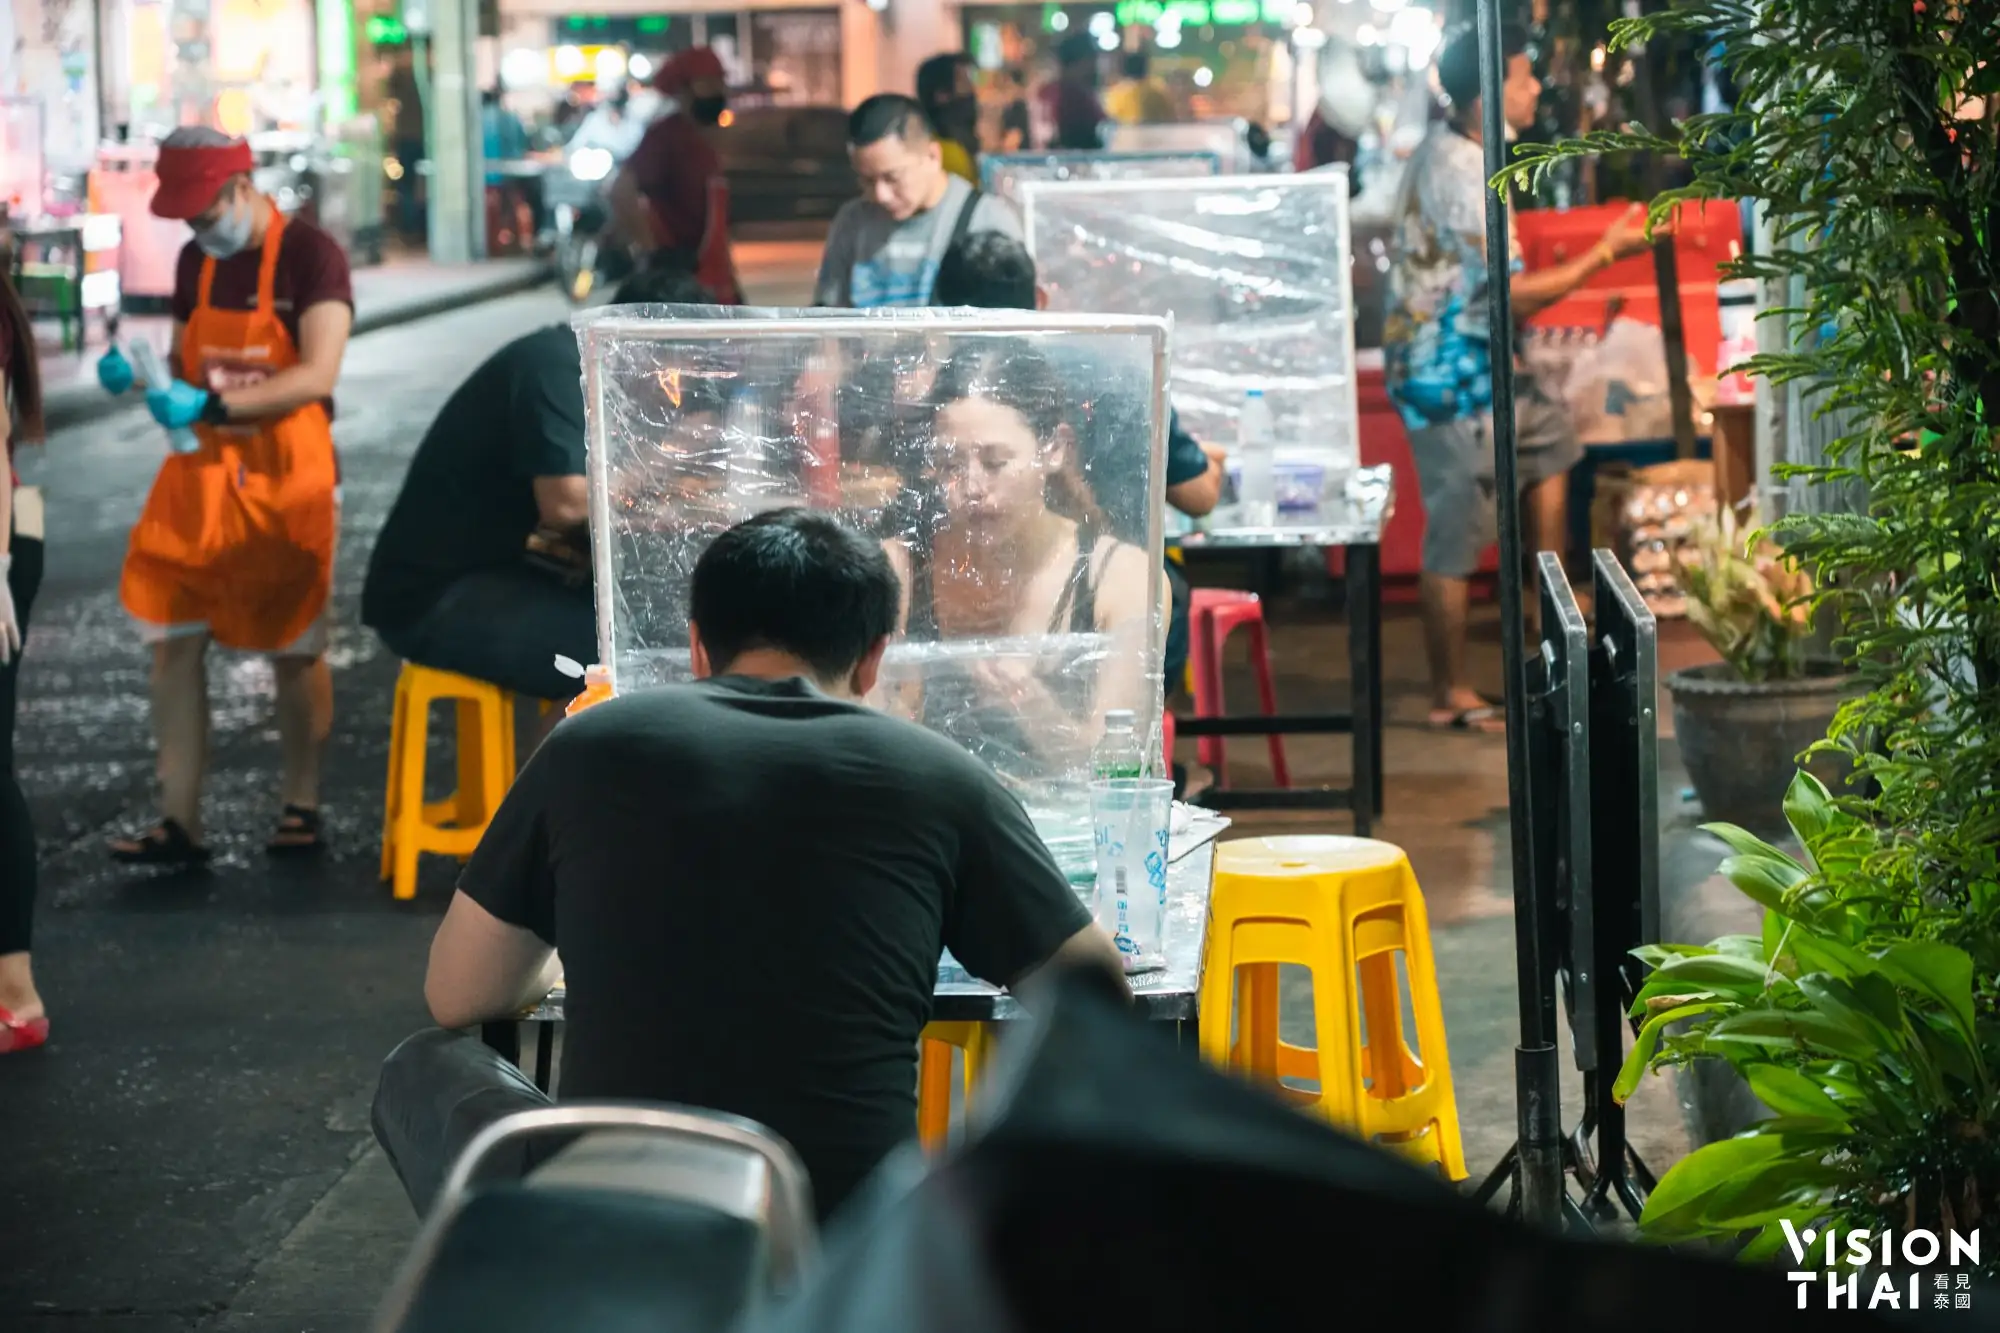 曼谷中國城店家的防疫舉措(VISION THAI)